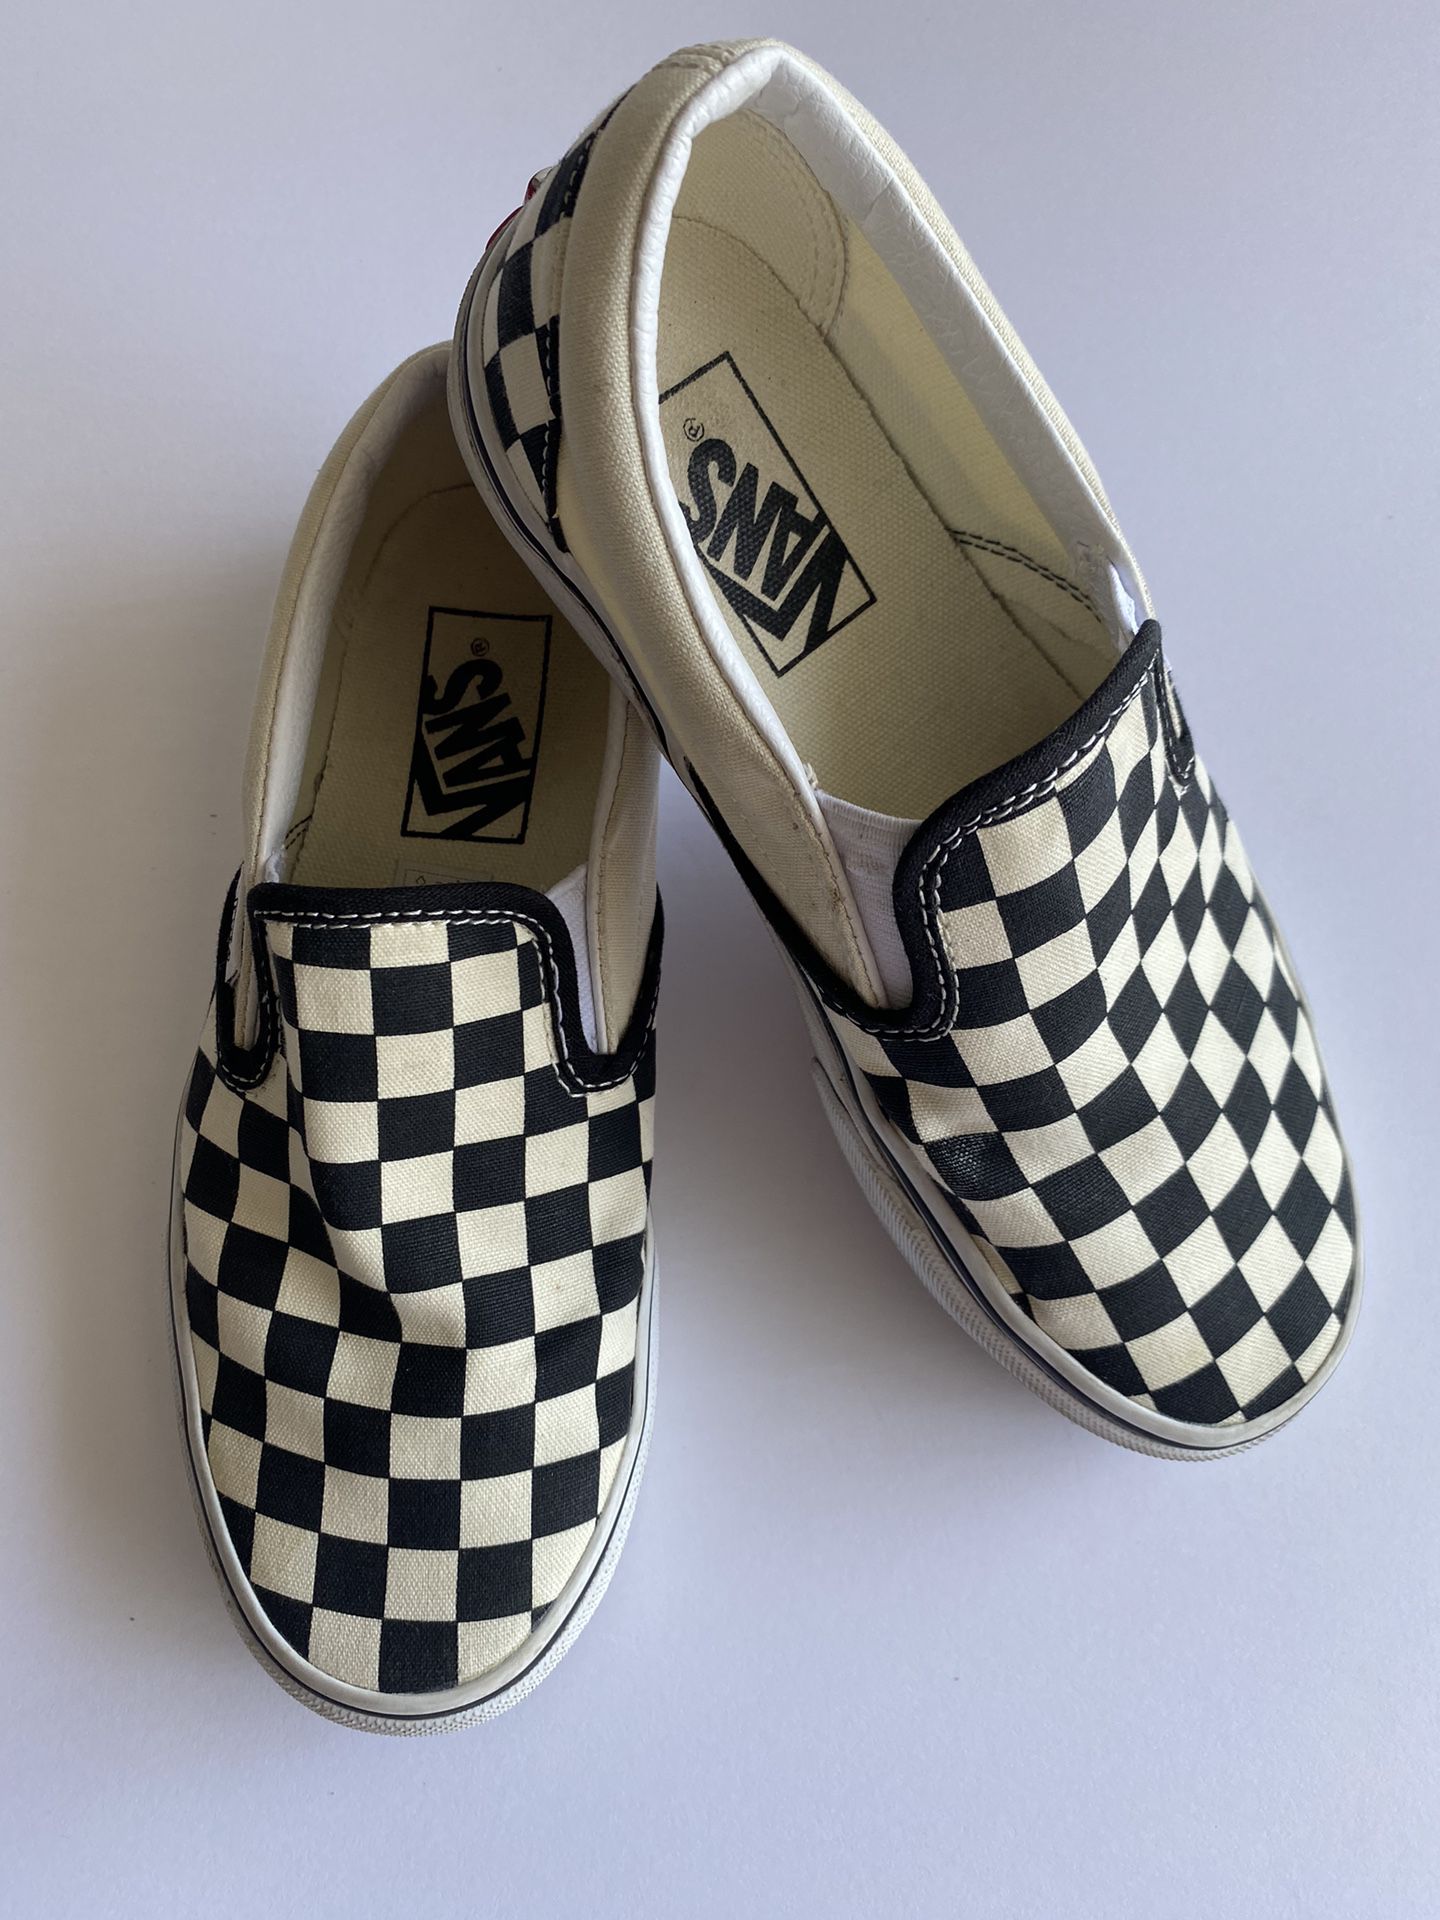 VANS Classic Slip-On Checkerboard Black/white Size 6